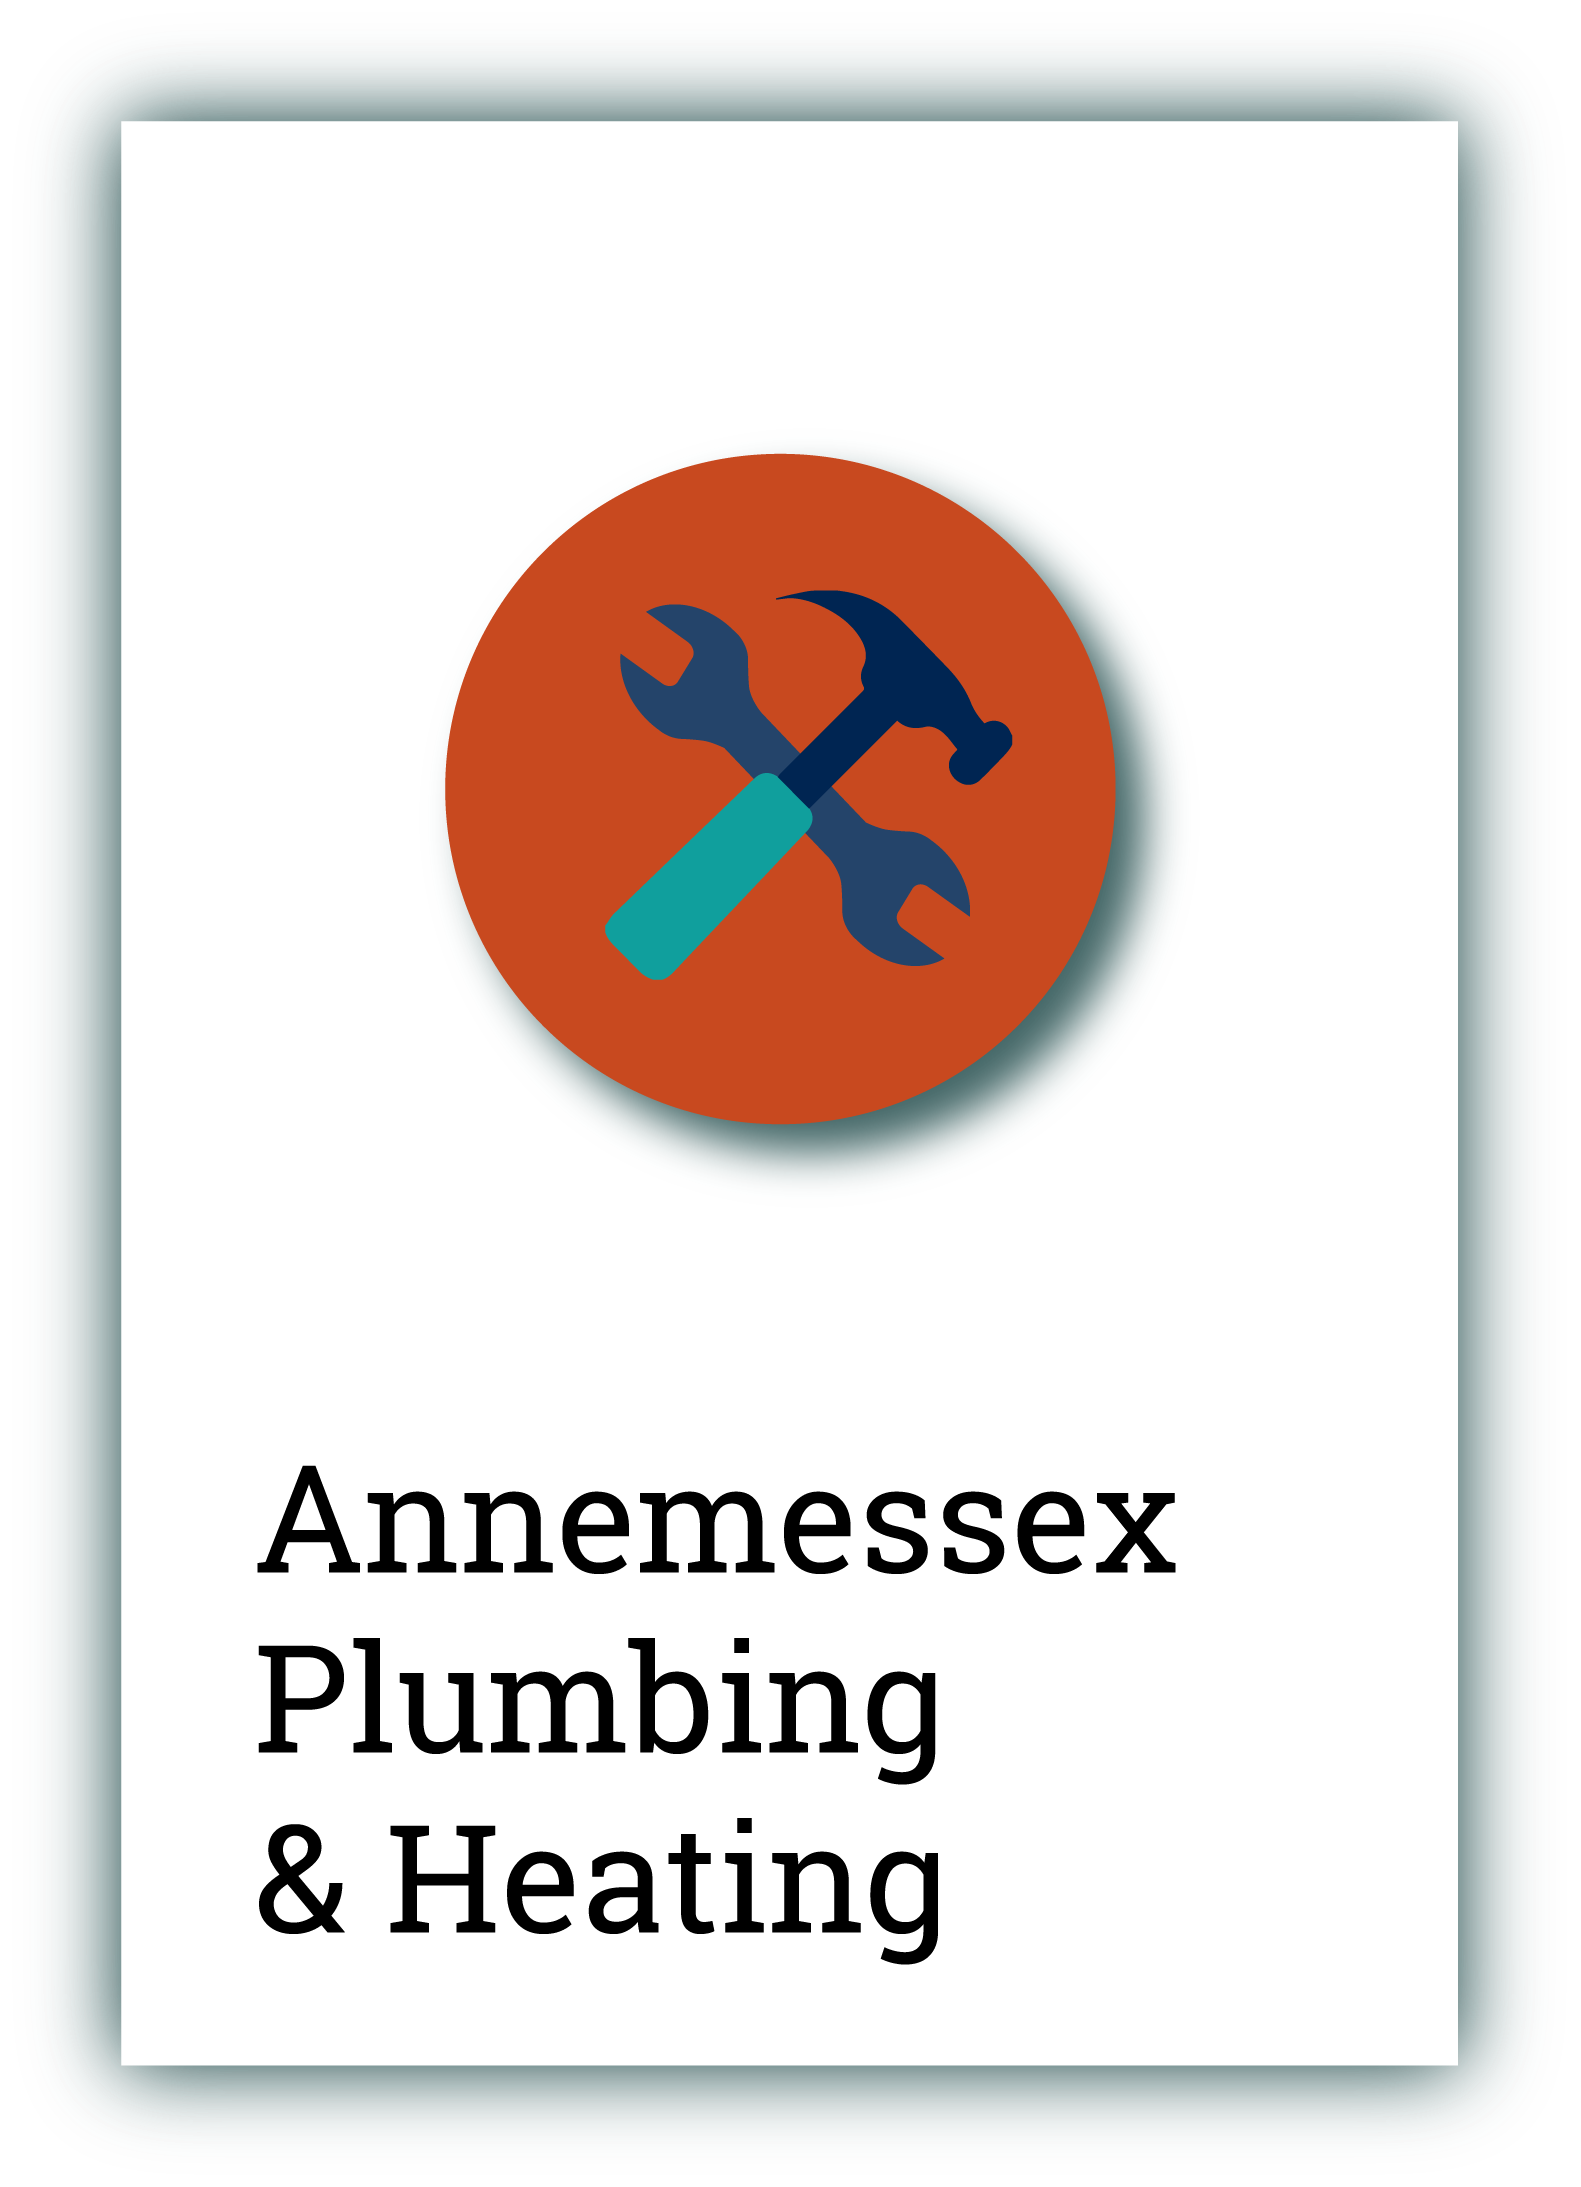 Annemessex Plumbing & Heating 4